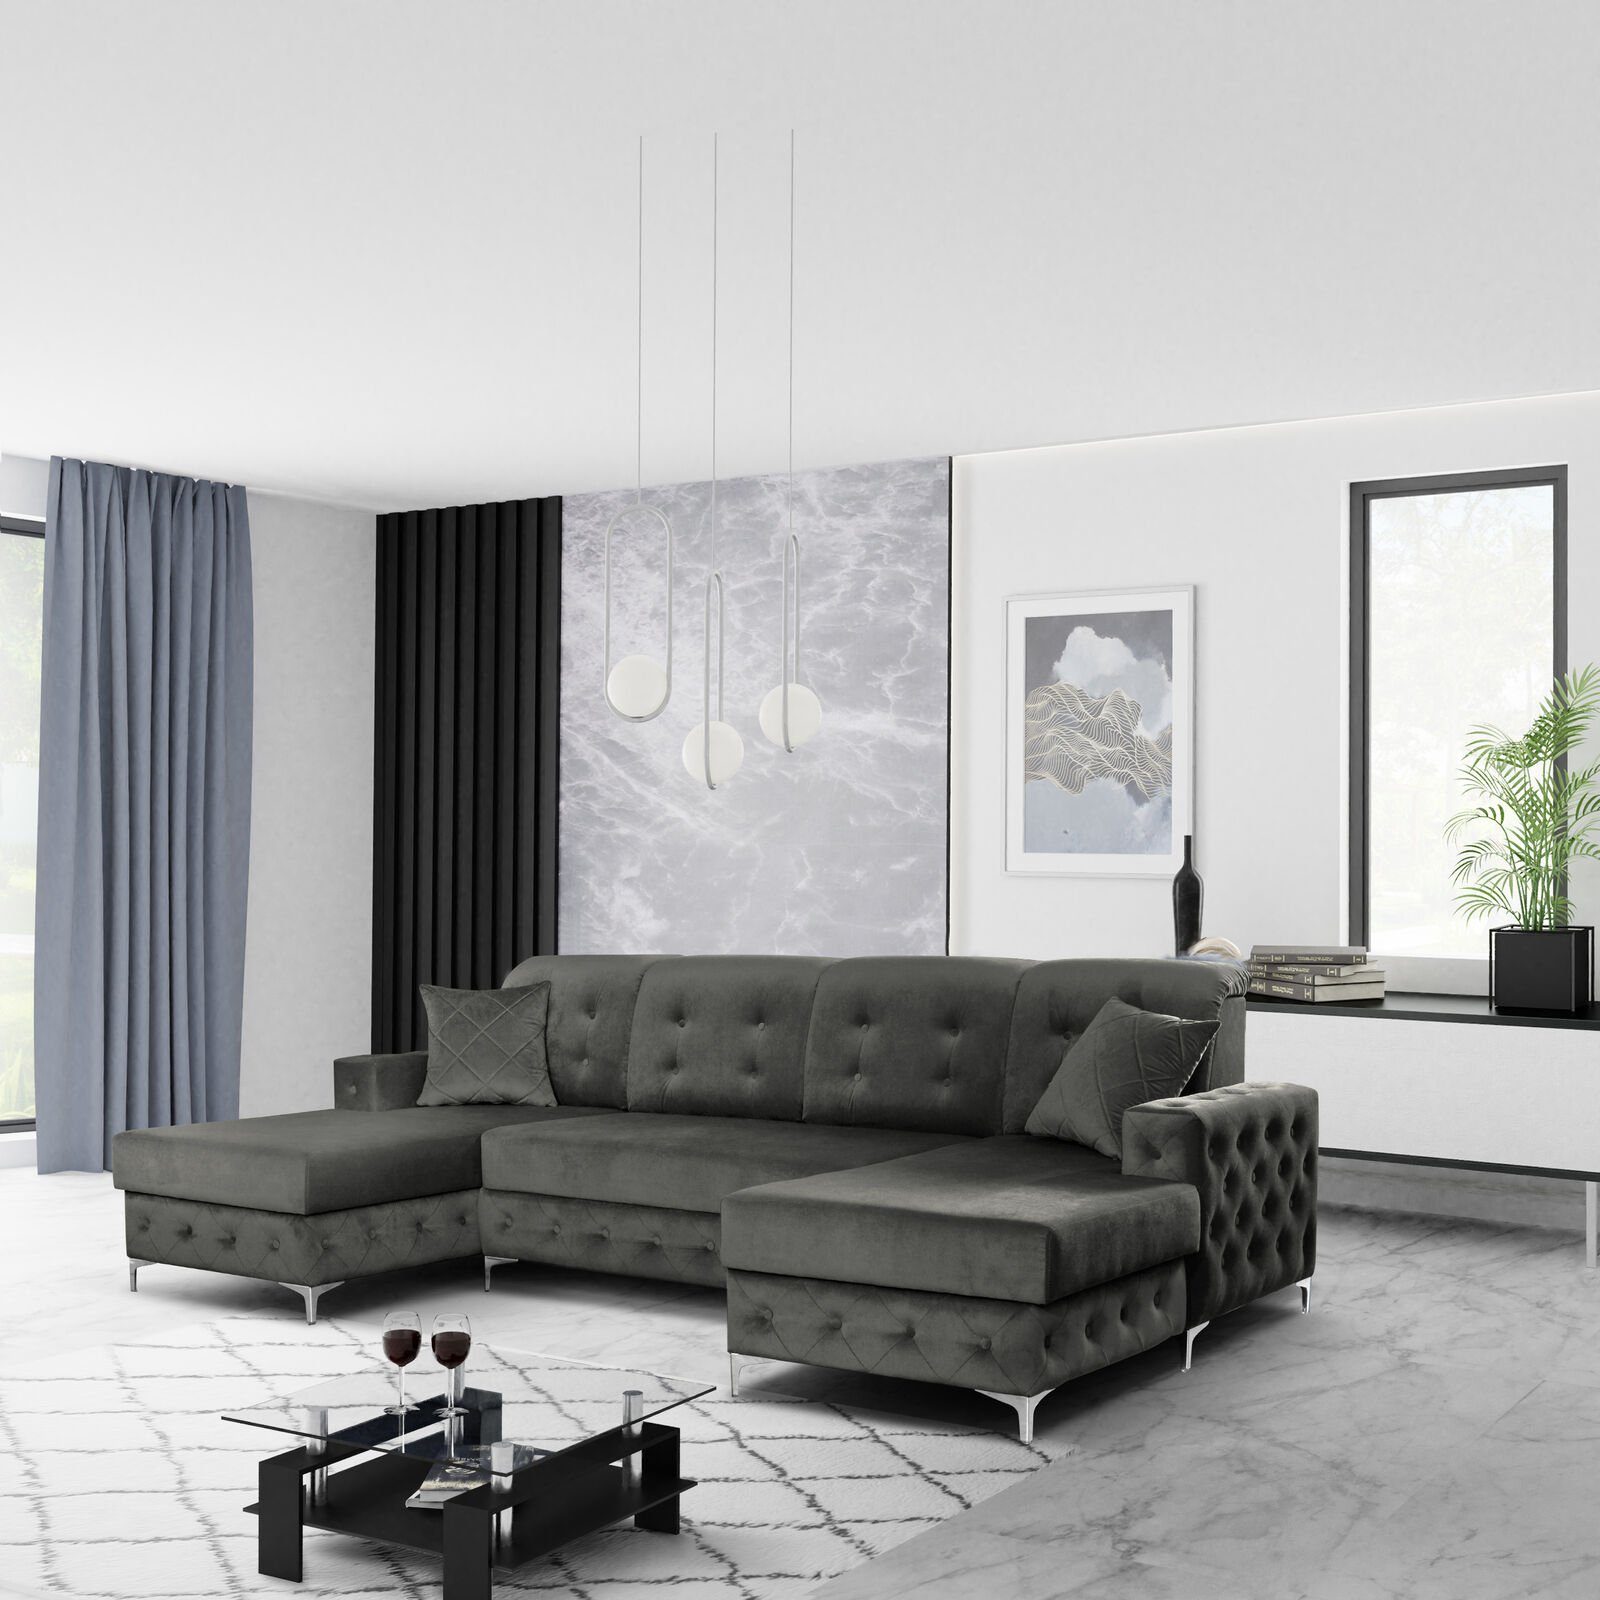 JVmoebel Ecksofa, Design Ecksofa Polsterung Neu Textil Grau Holz Luxus Sofas Möbel Sofa